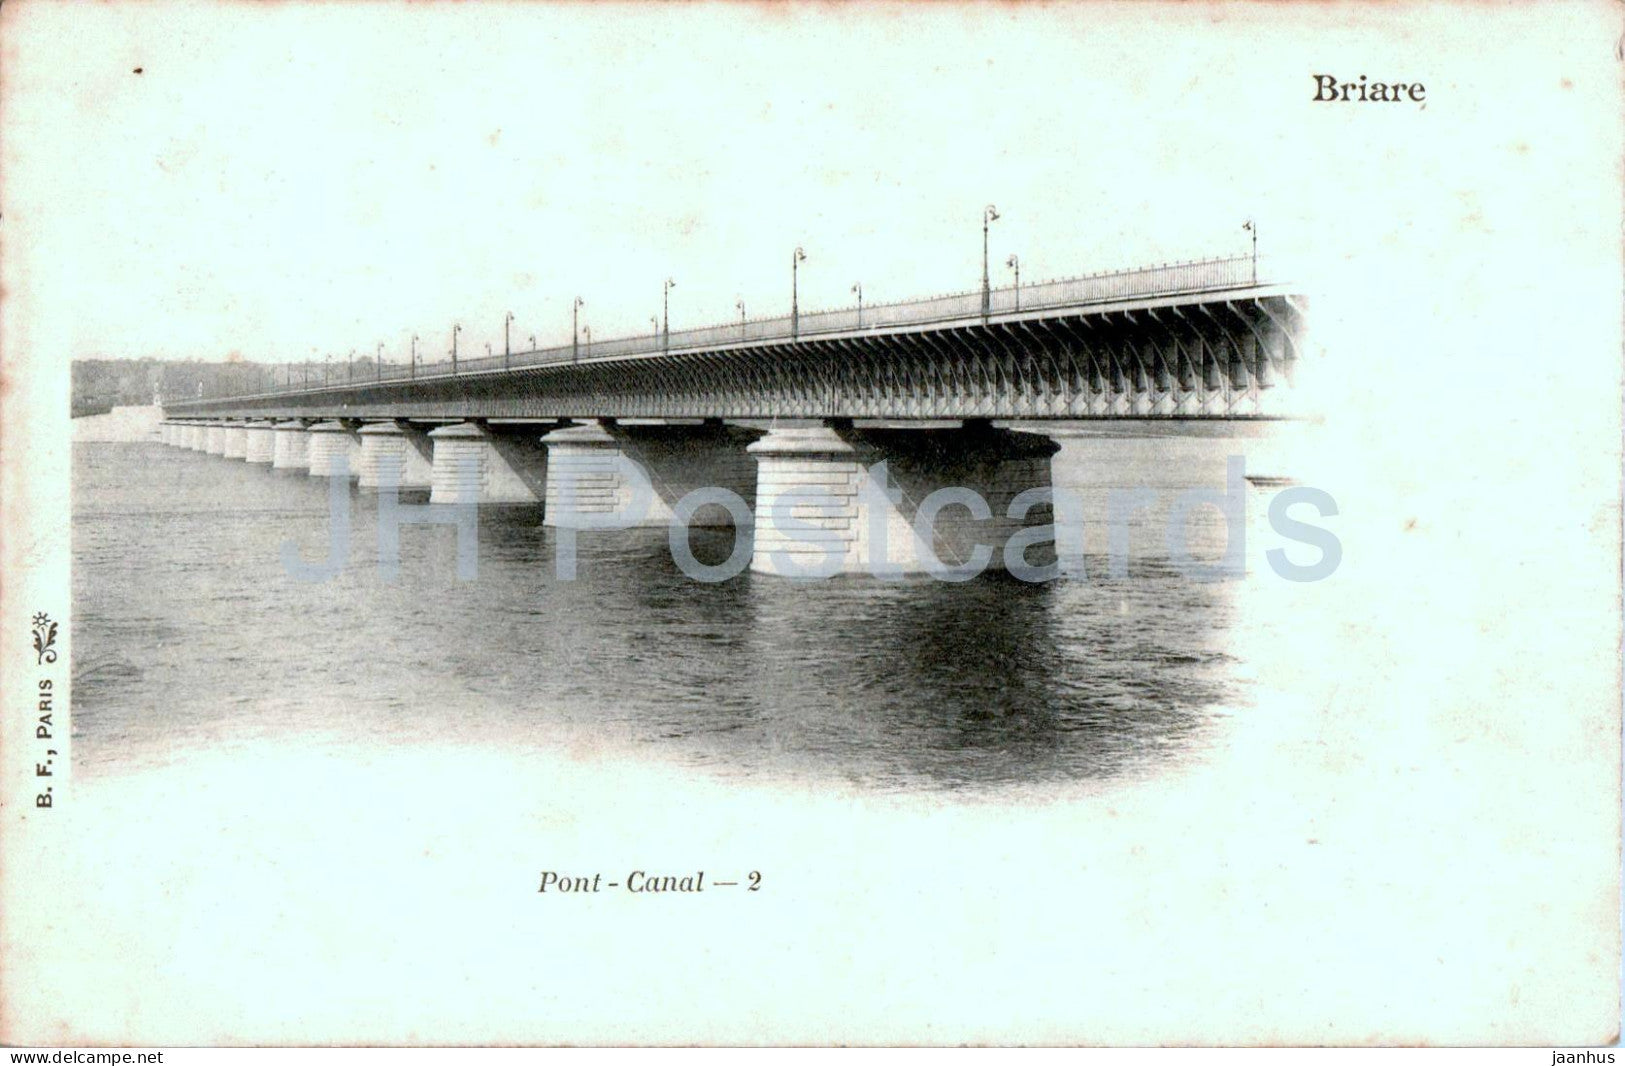 Briare - Pont Canal - bridge - 2 - old postcard - France - unused - JH Postcards